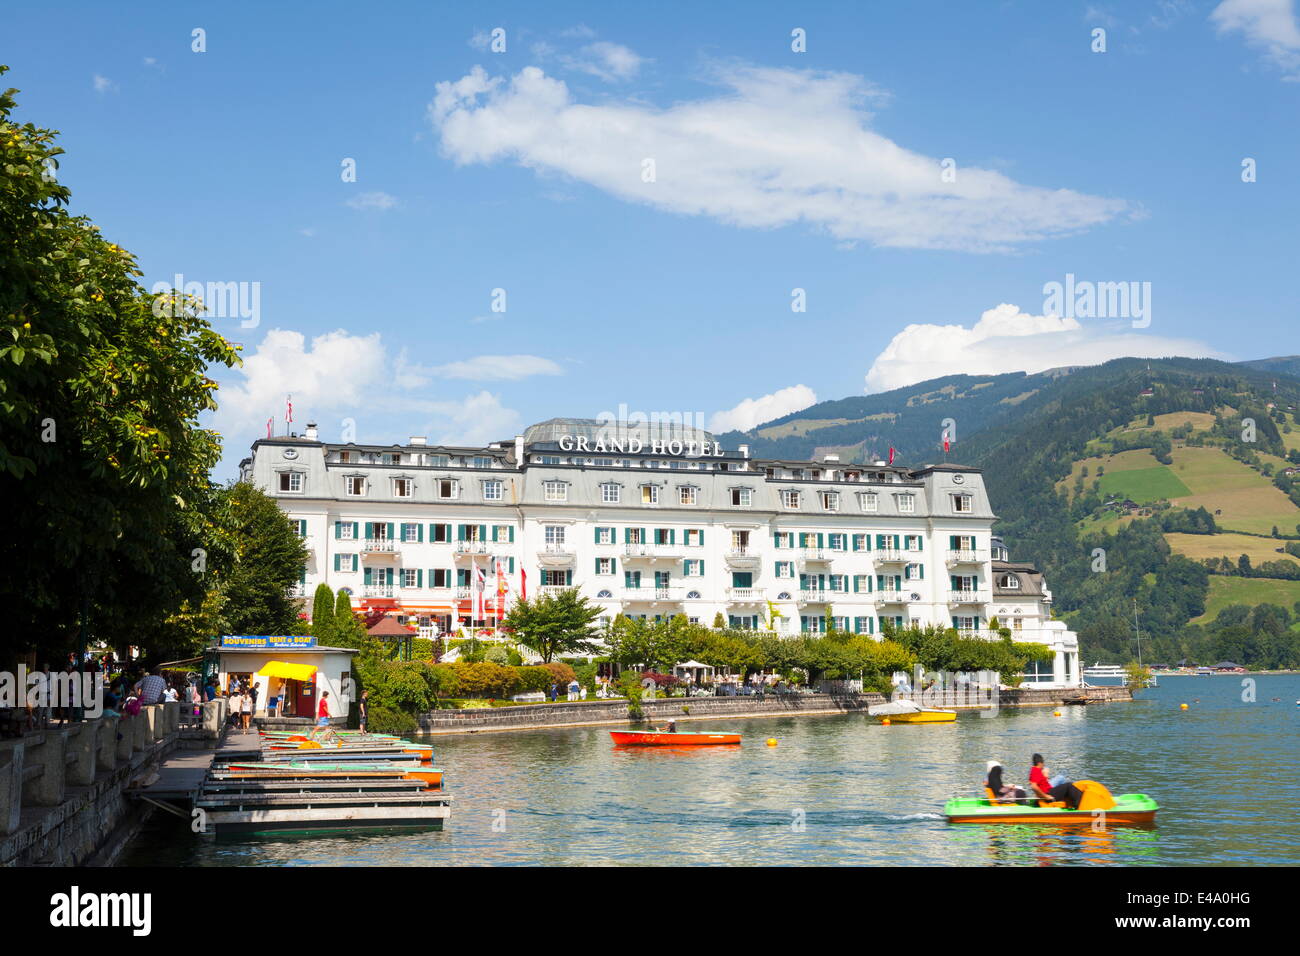 Grand Hotel on Lake Zell am See, Pinzgau, Salzkammergut, Austria, Europe Stock Photo